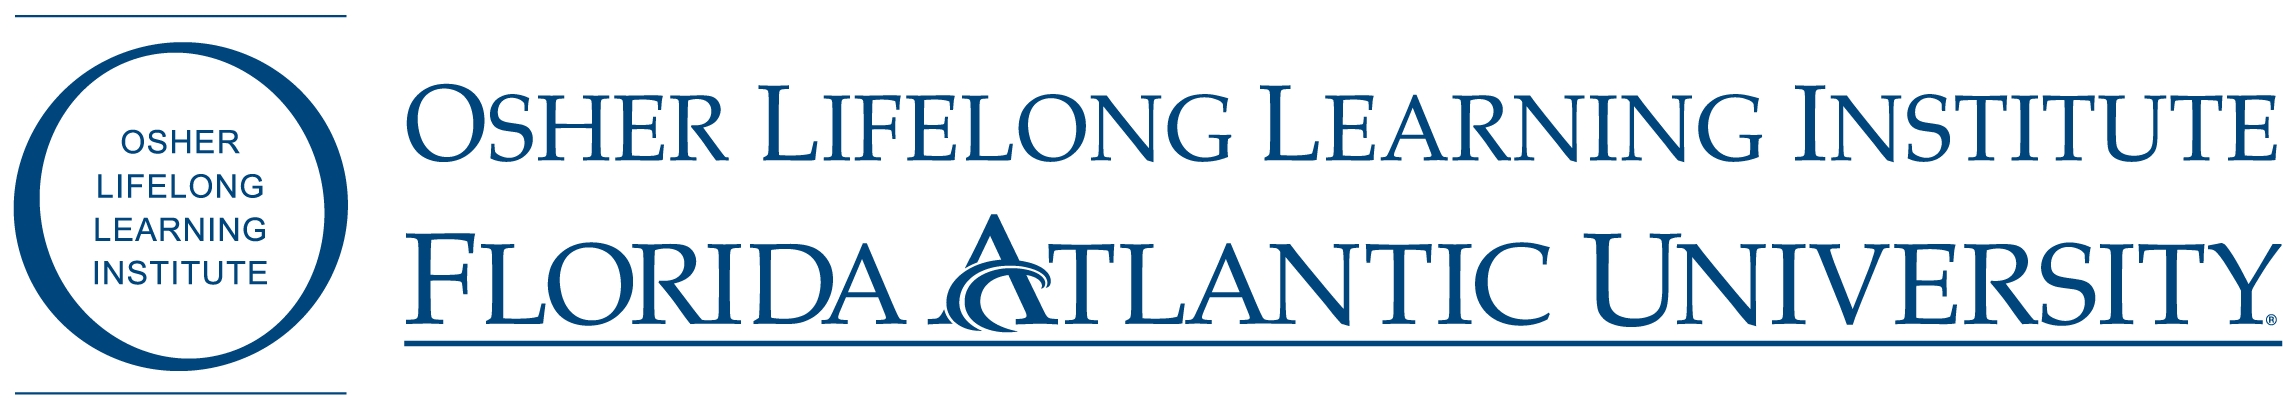 Osher Lifelong Learning Institute at Florida Atlantic University